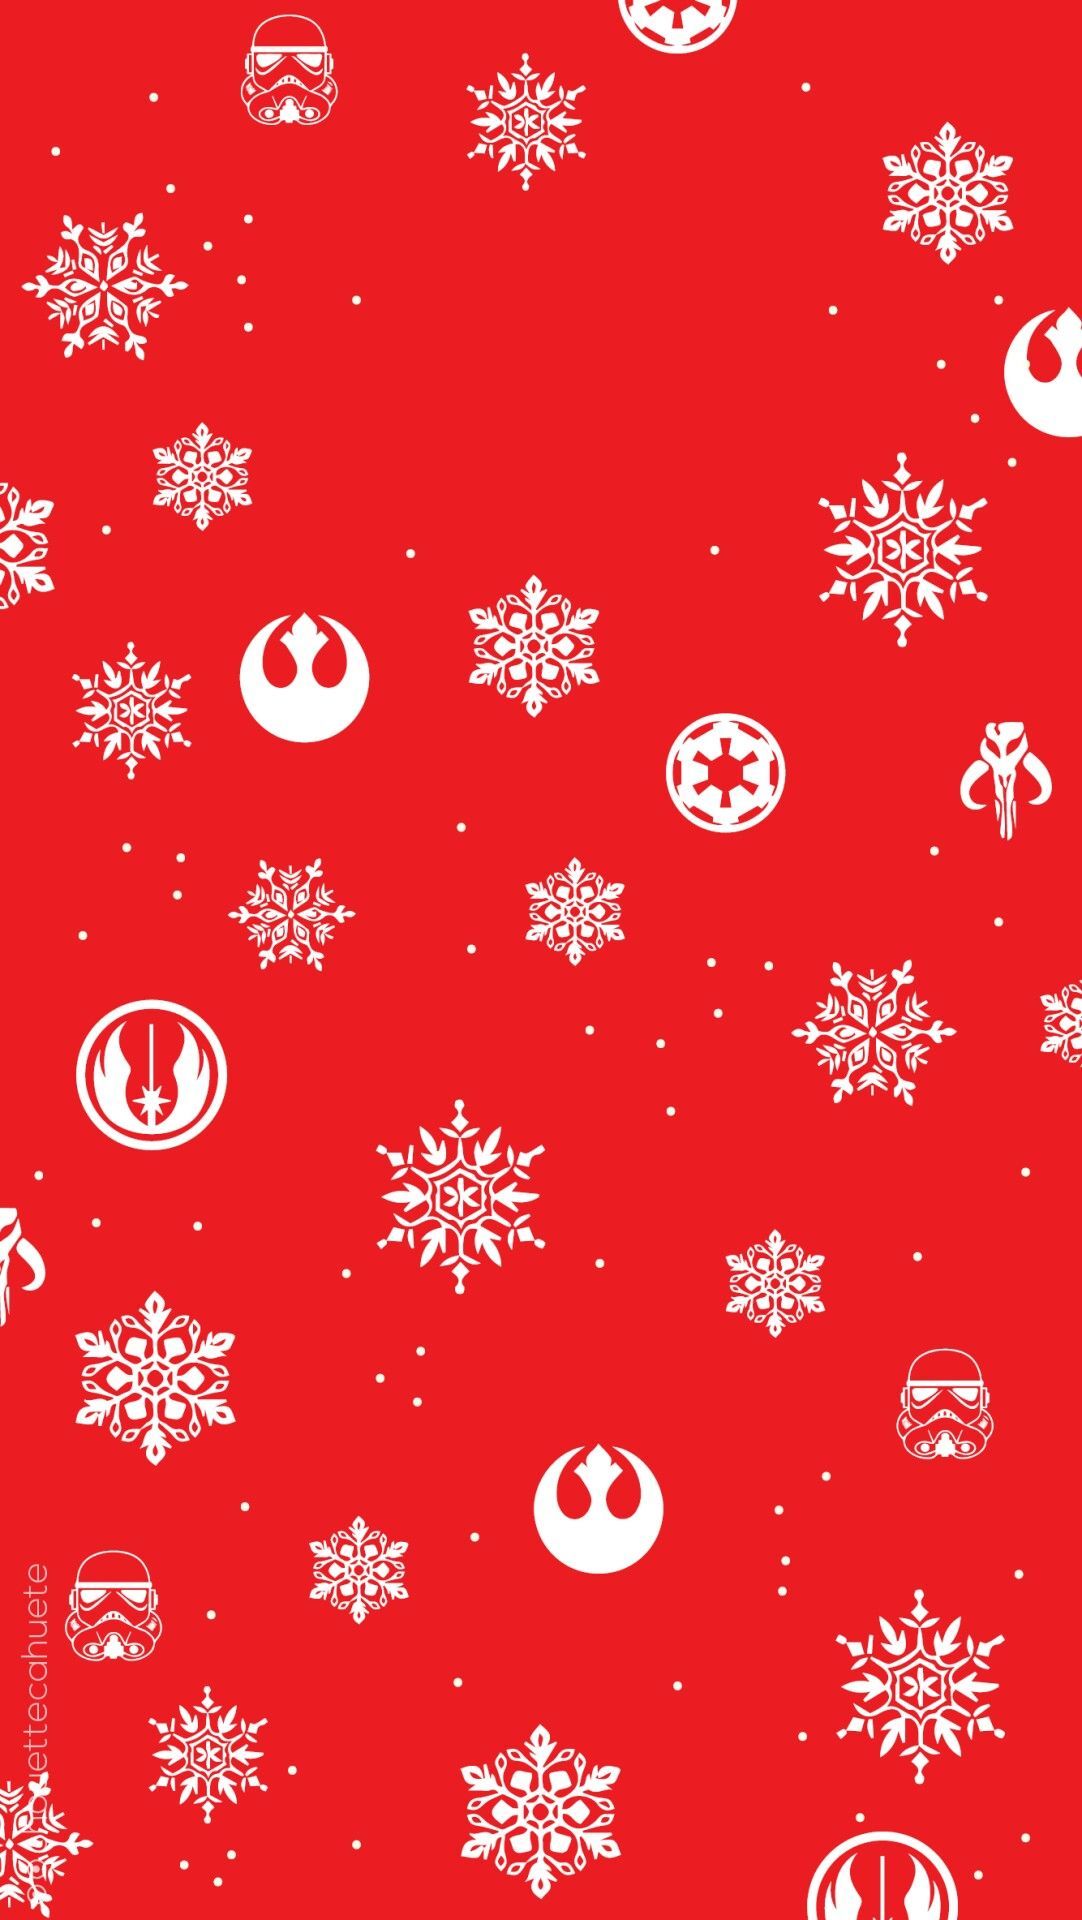 Christmas star wars. Star wars christmas, Star wars art, Star wars wallpaper